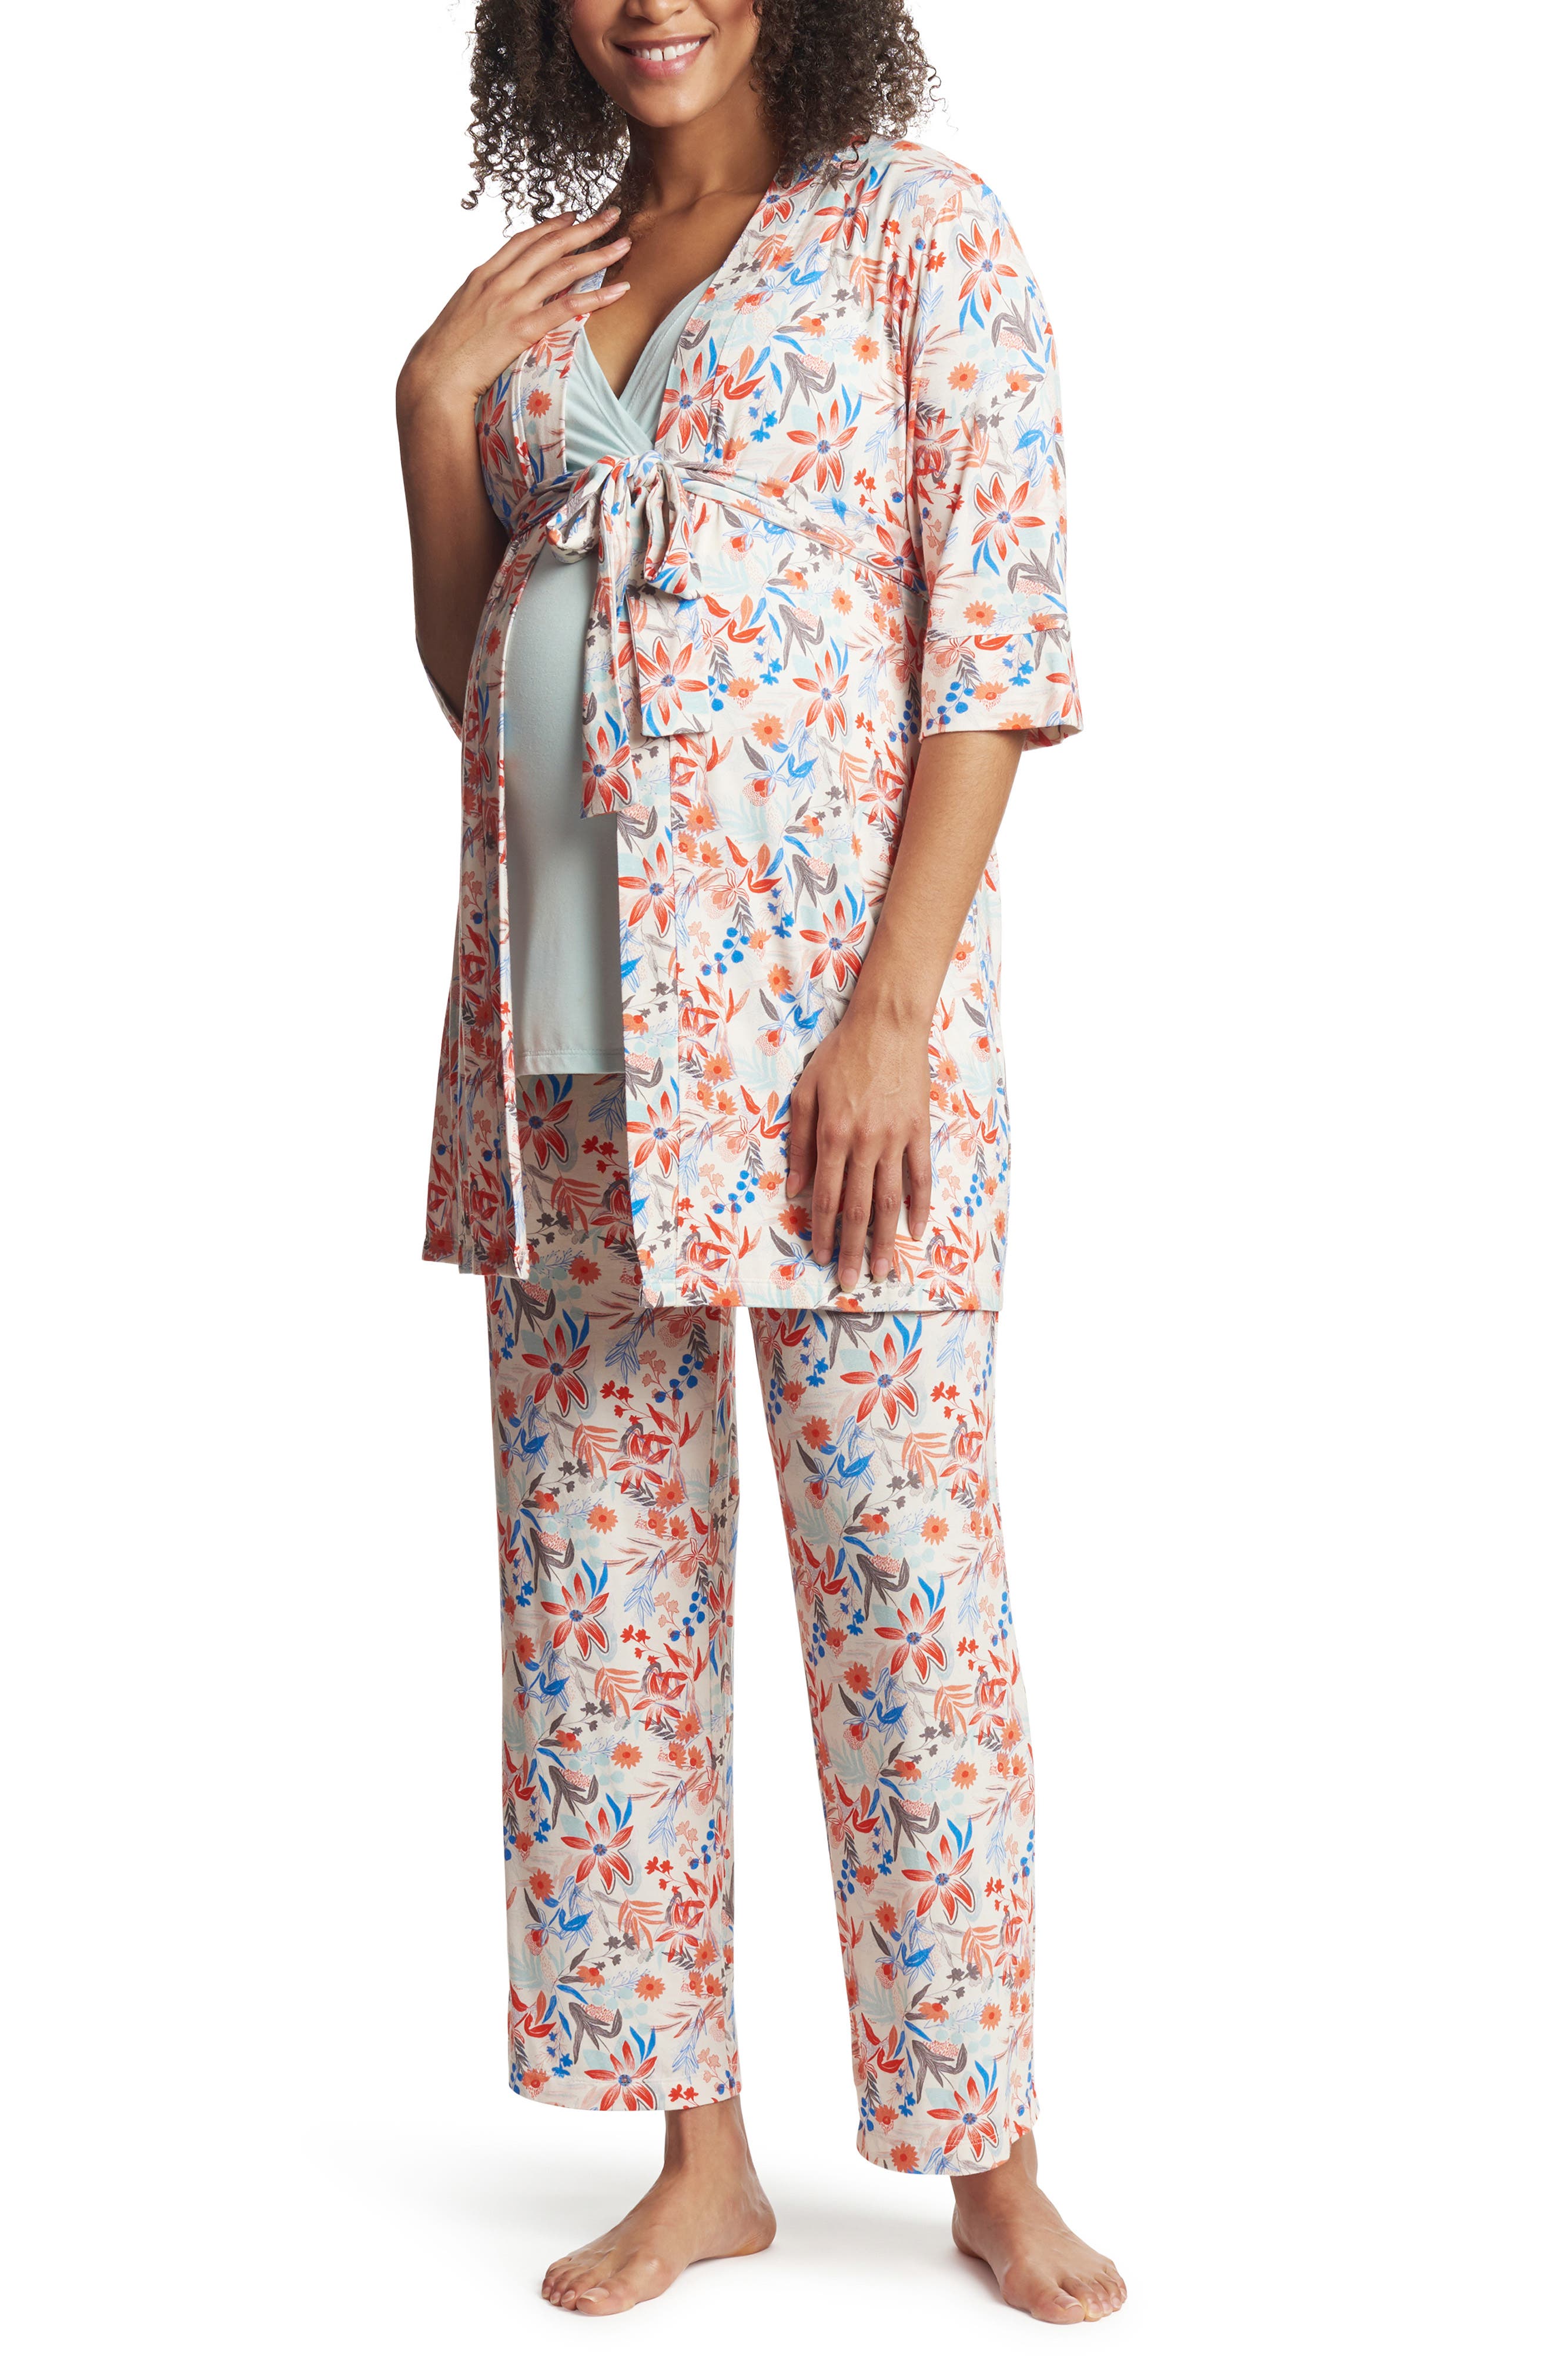 Everly Grey  During & After Maternity Nursing Helena Blue Sleepwear Pajama Set 